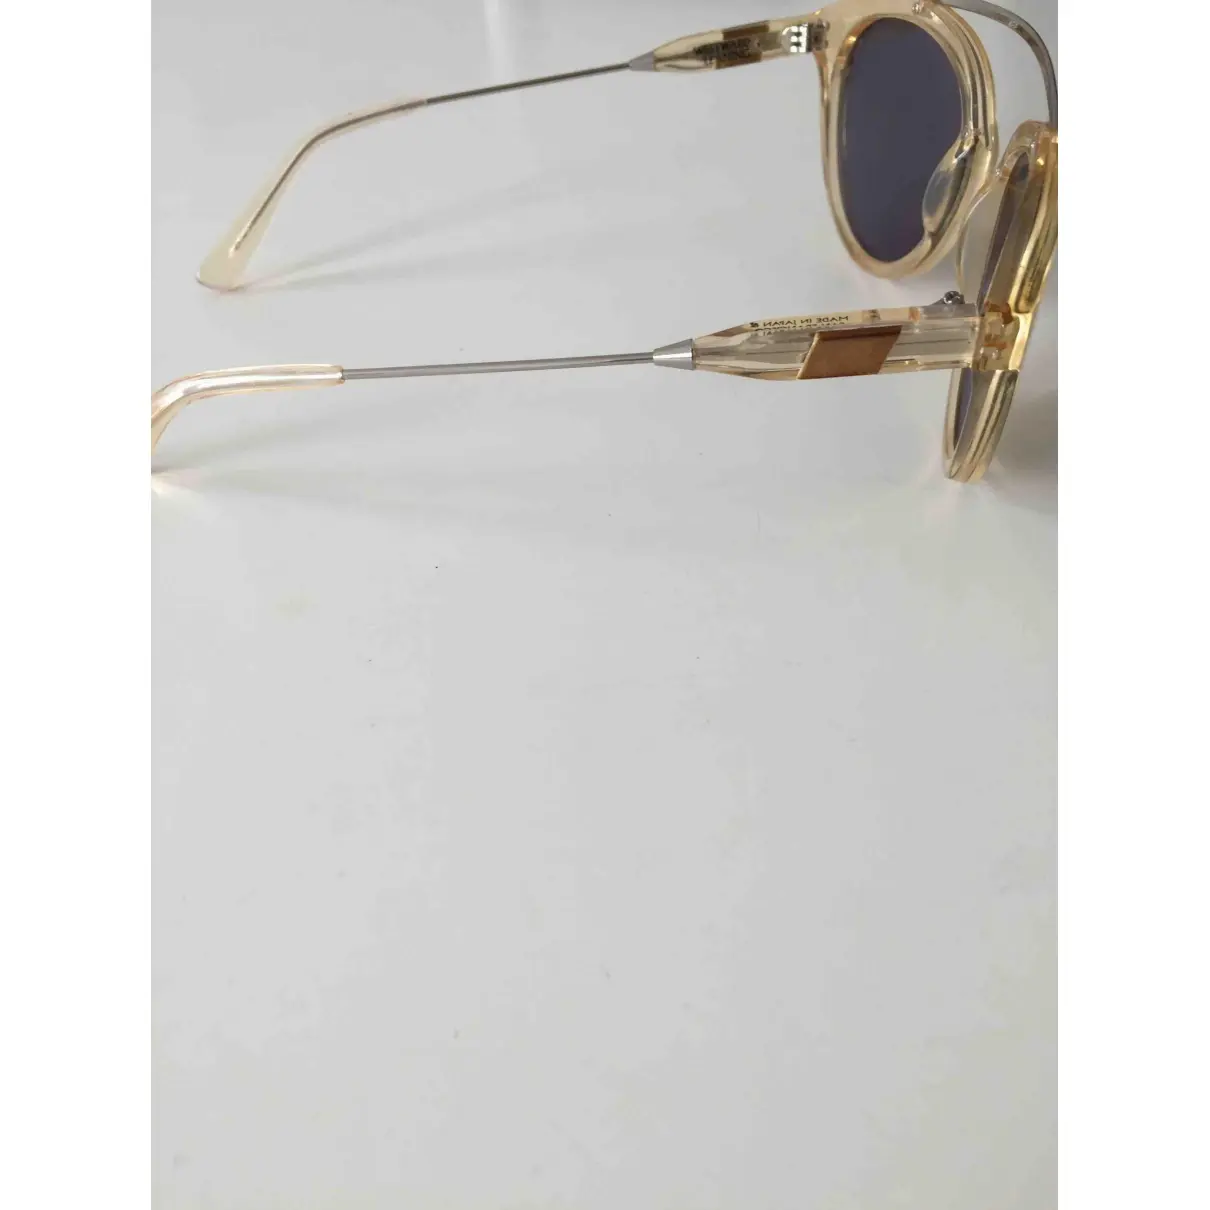 Buy Westward Leaning Sunglasses online